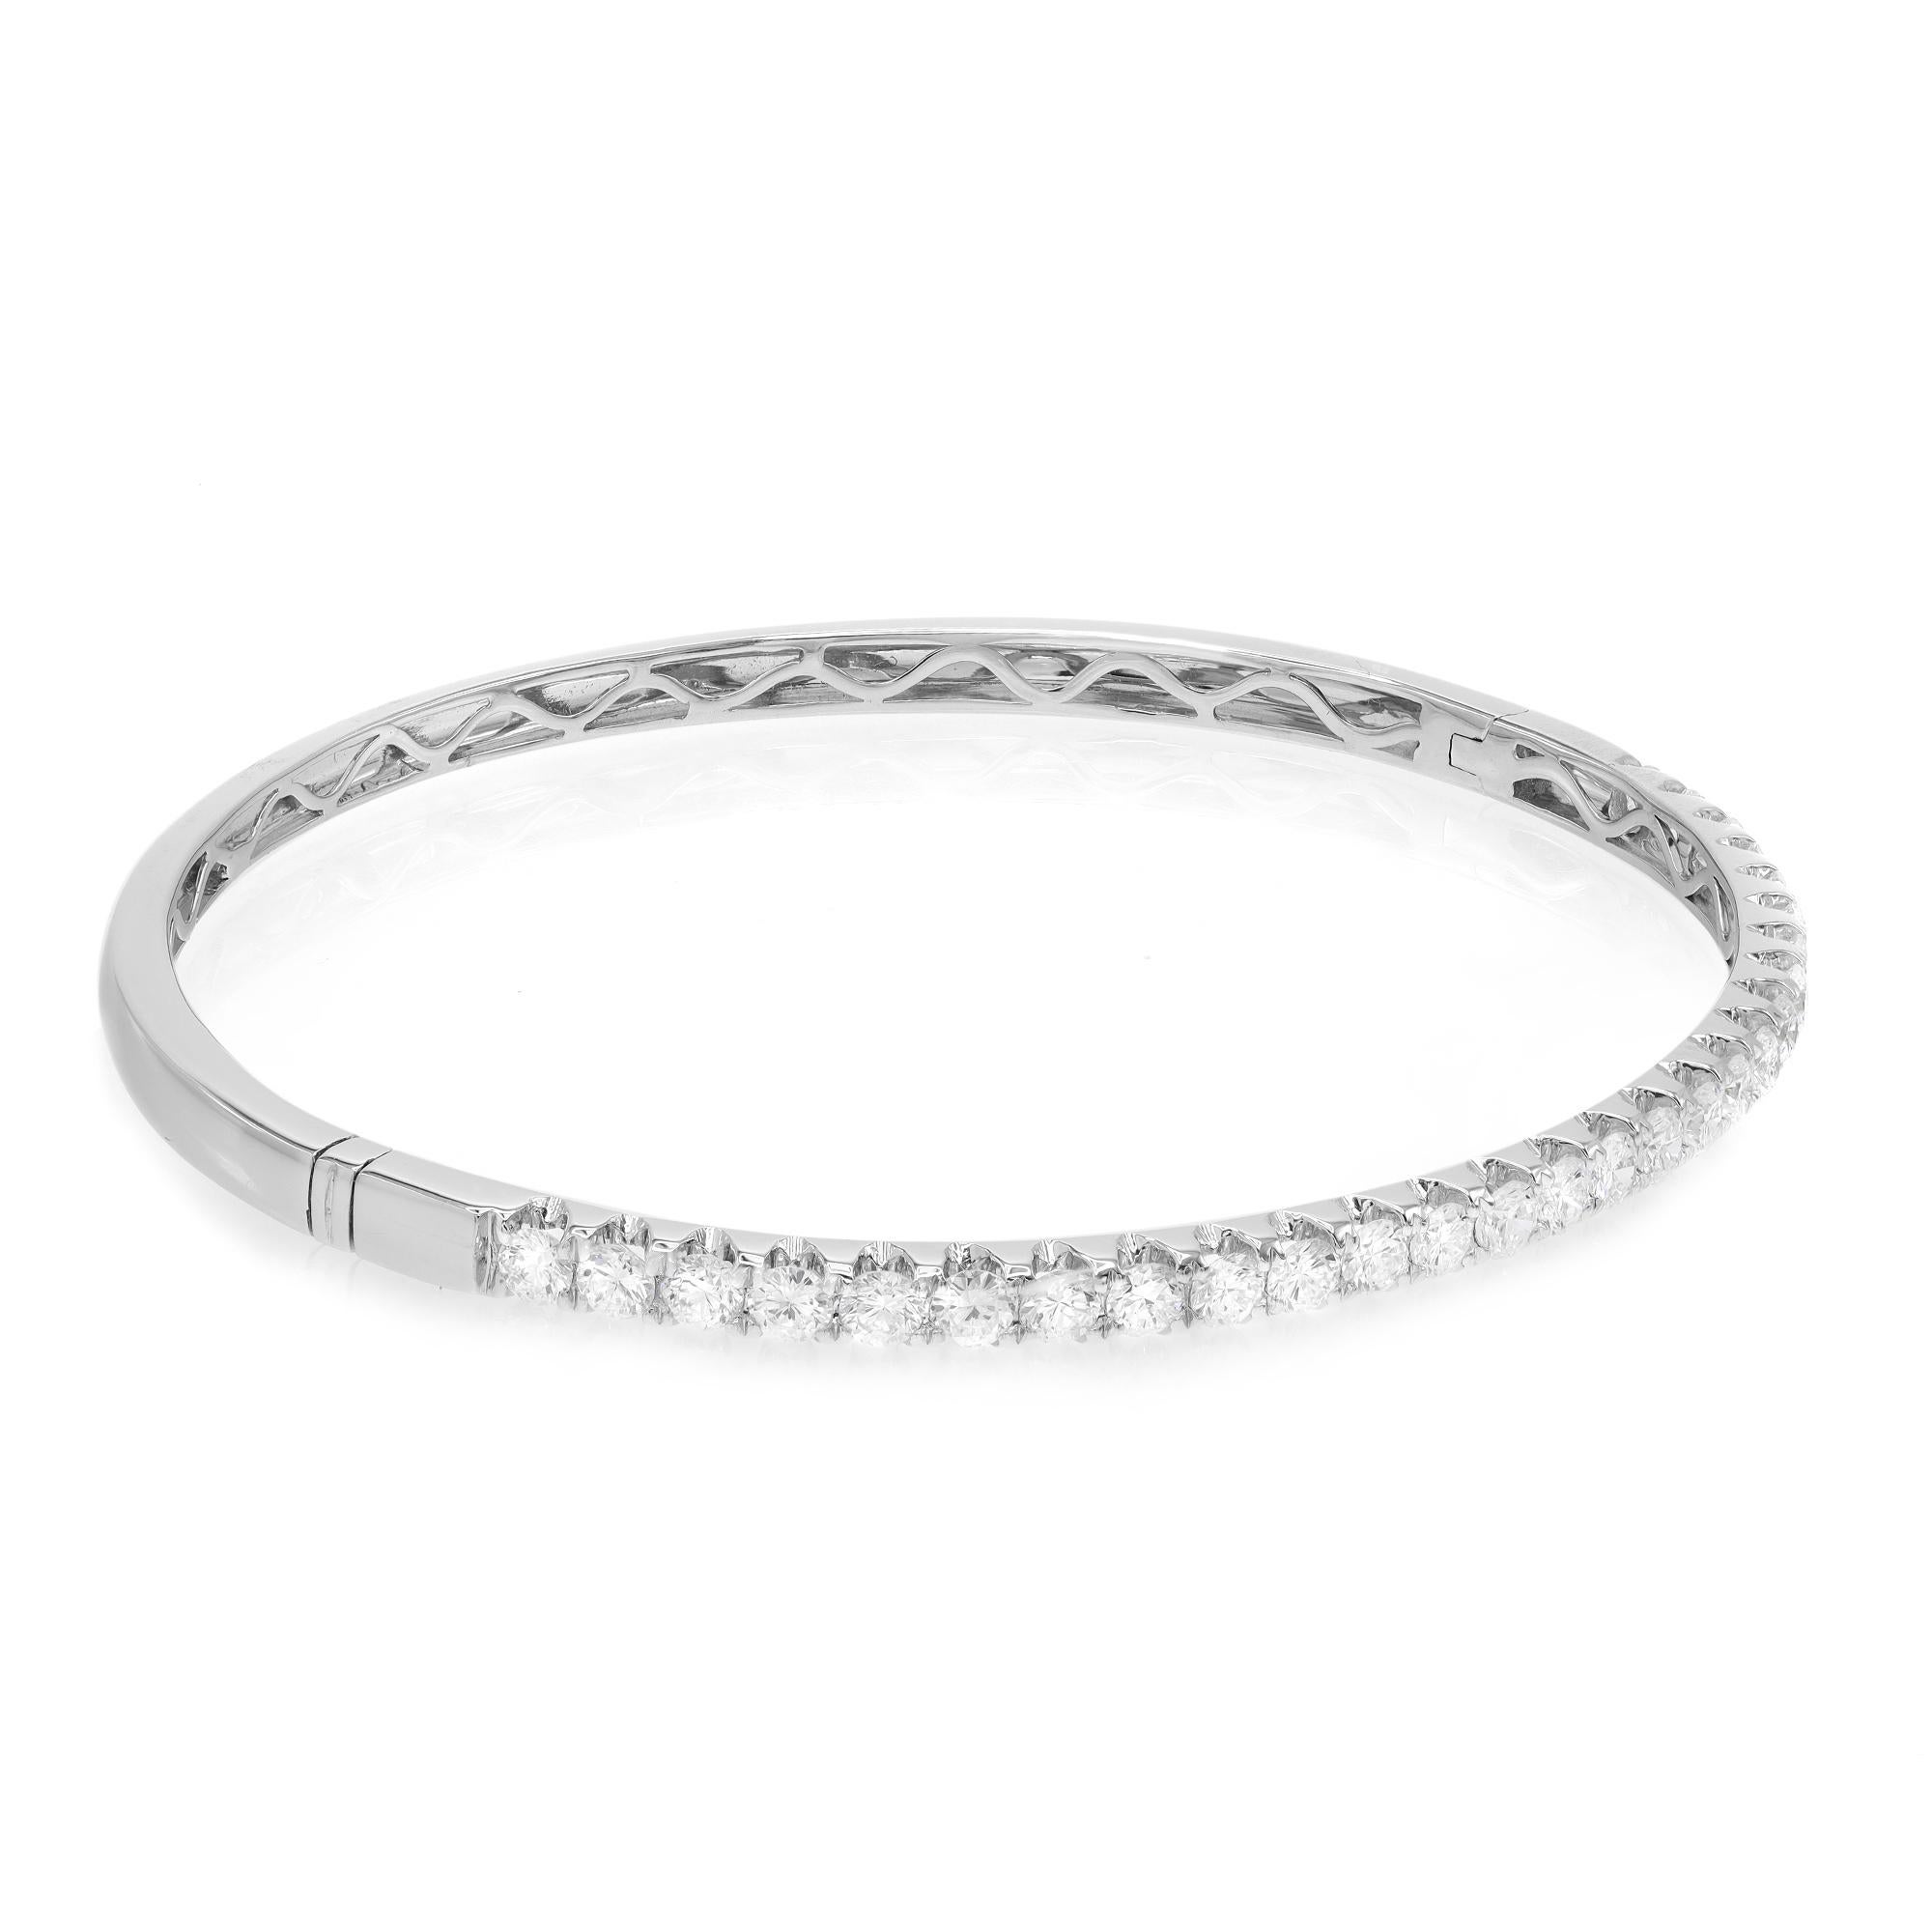 Rachel Koen Round Cut Diamond Bangle Bracelet 18K White Gold 2.00Cttw In New Condition For Sale In New York, NY